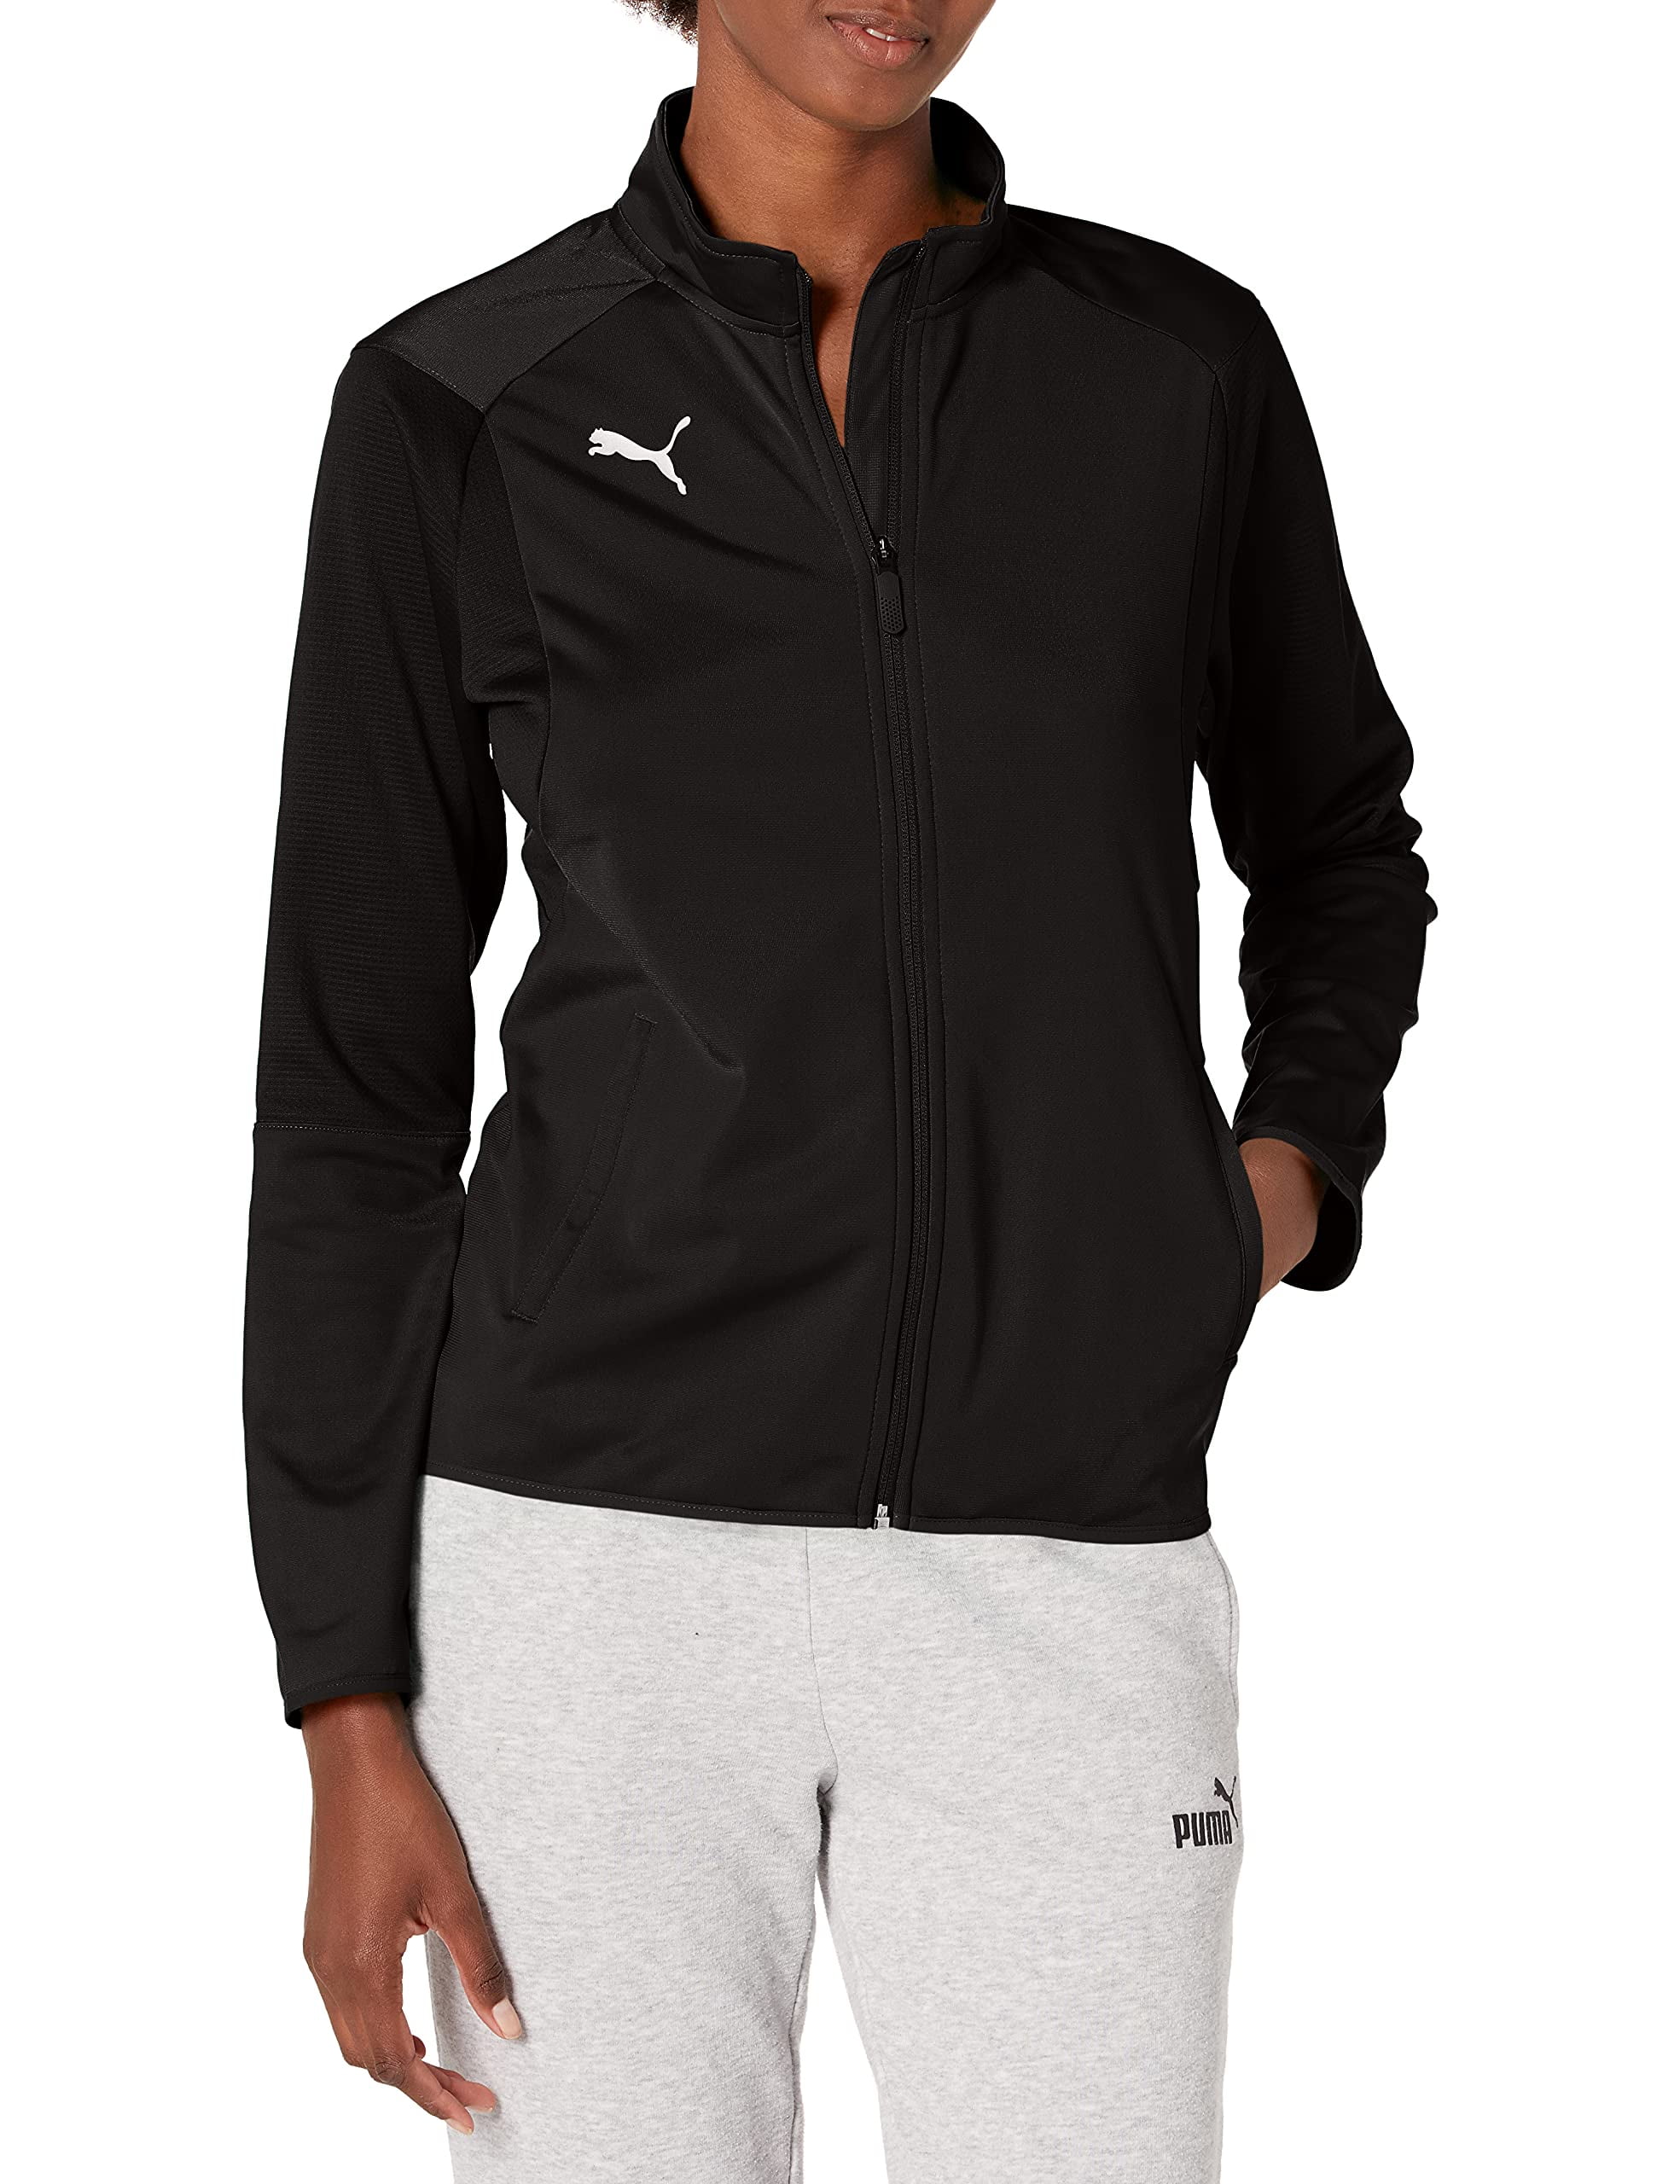 PUMA Womens Liga Training Jacket - Black/White - Medium - Walmart.com